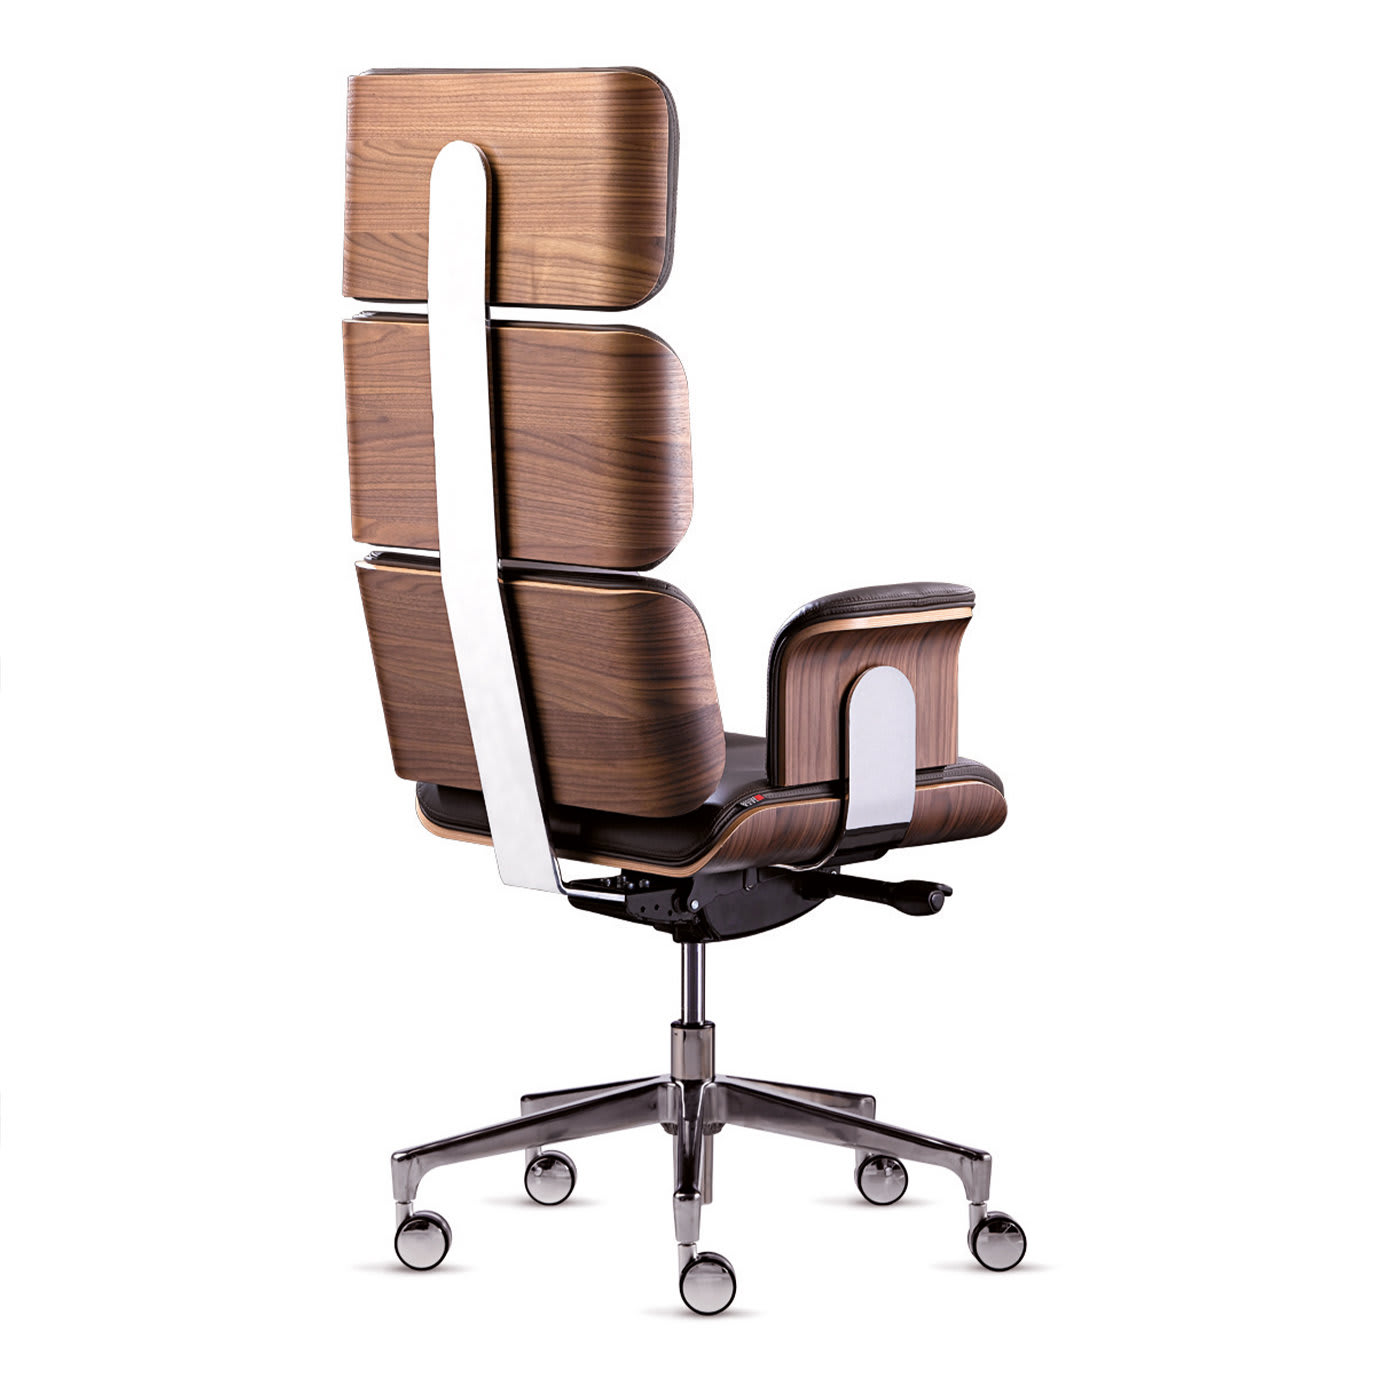 Armadillo 1 Dark Brown High Back Swivel Office Armchair by Rainer Bachschmid - Altek Italia Design